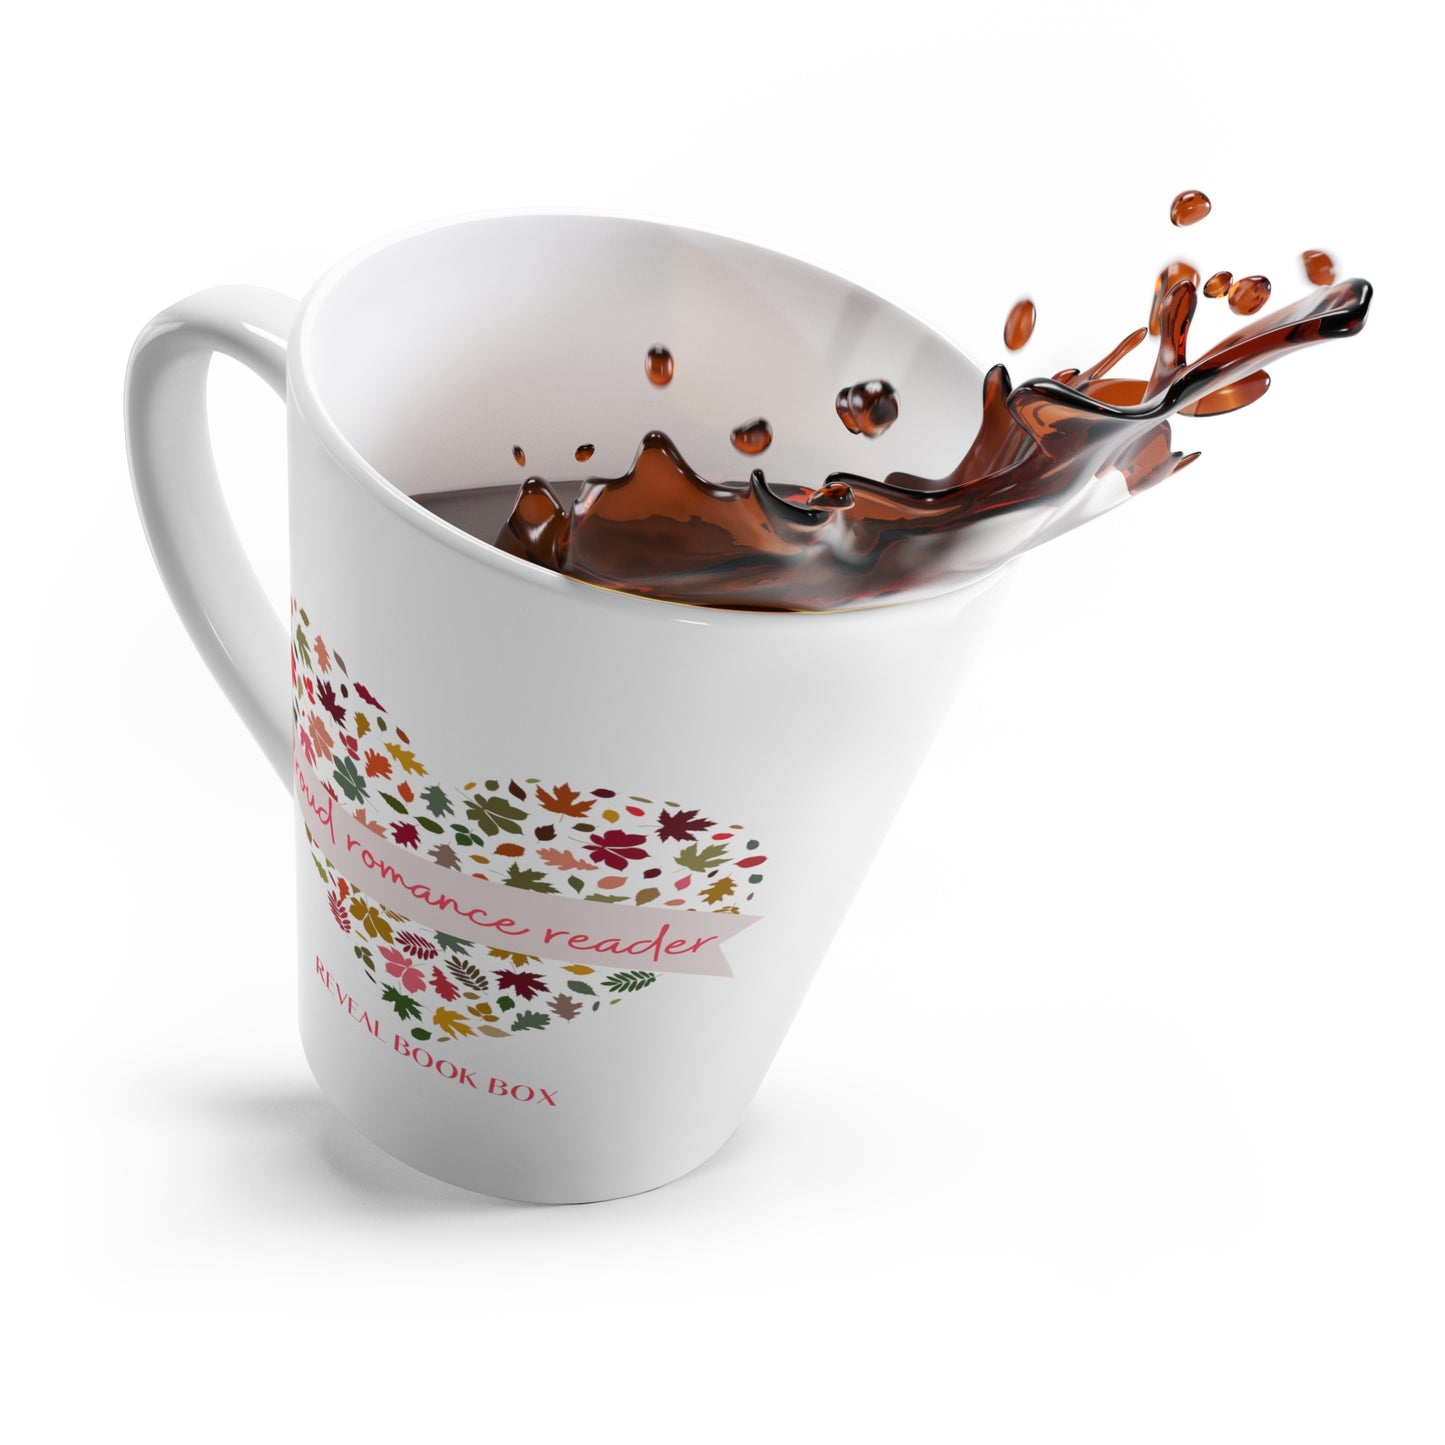 Proud Romance Reader (Autumn) - Latte Mug